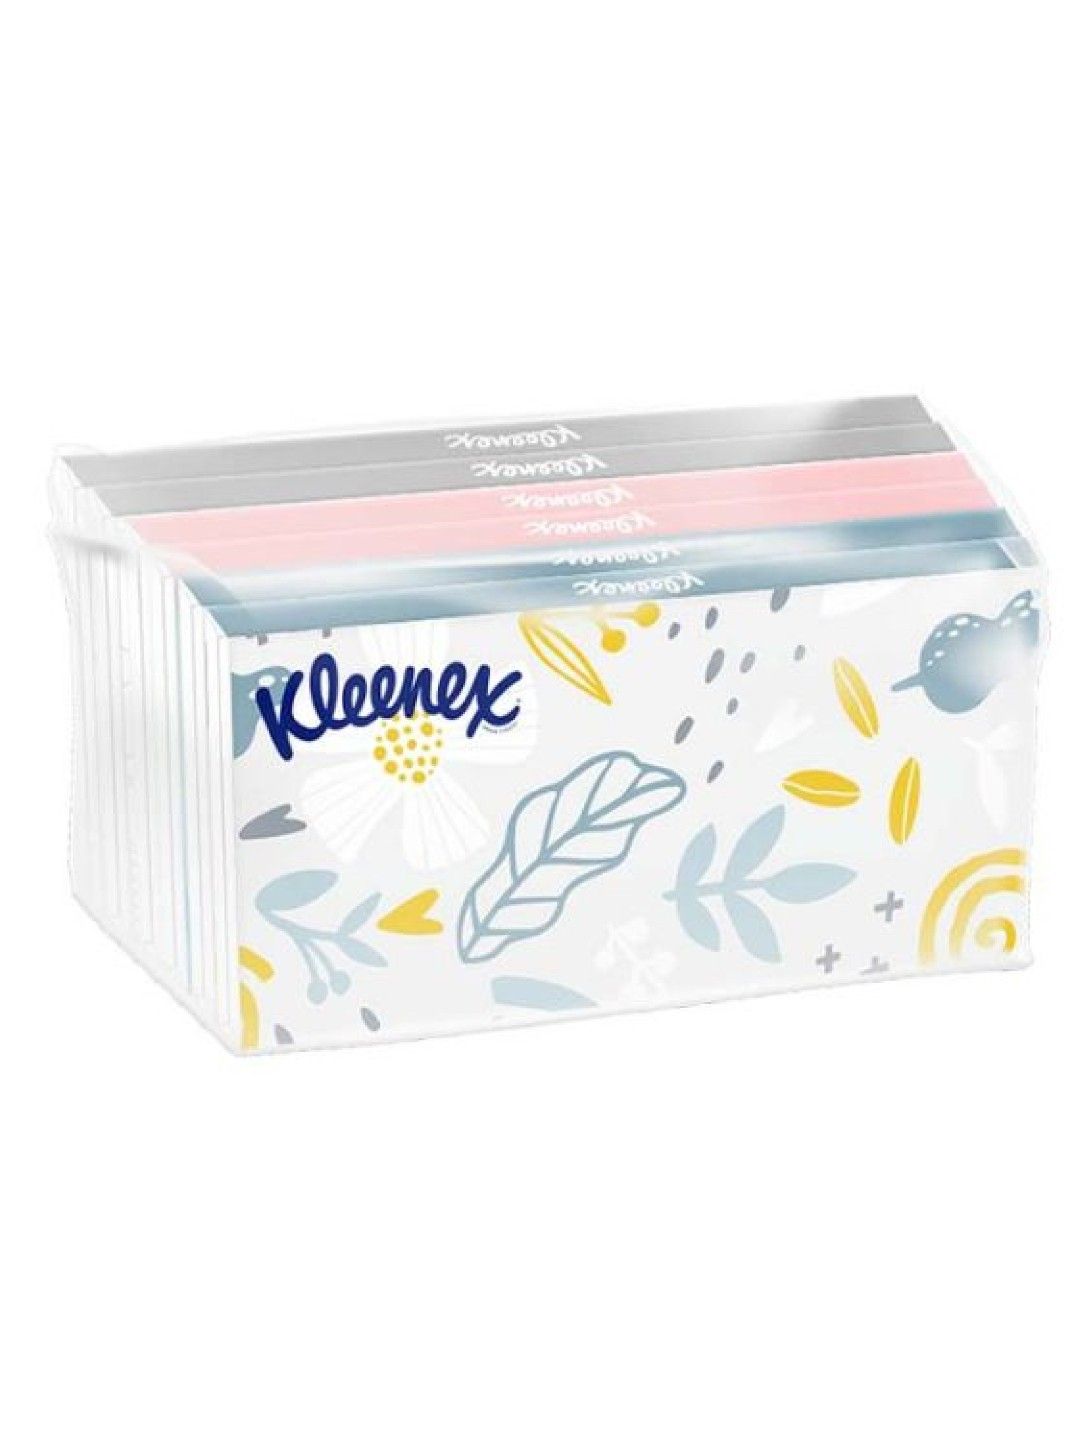 Kleenex Facial Tissue Pocket Packs - 60 sheets (10s x 6 packs)